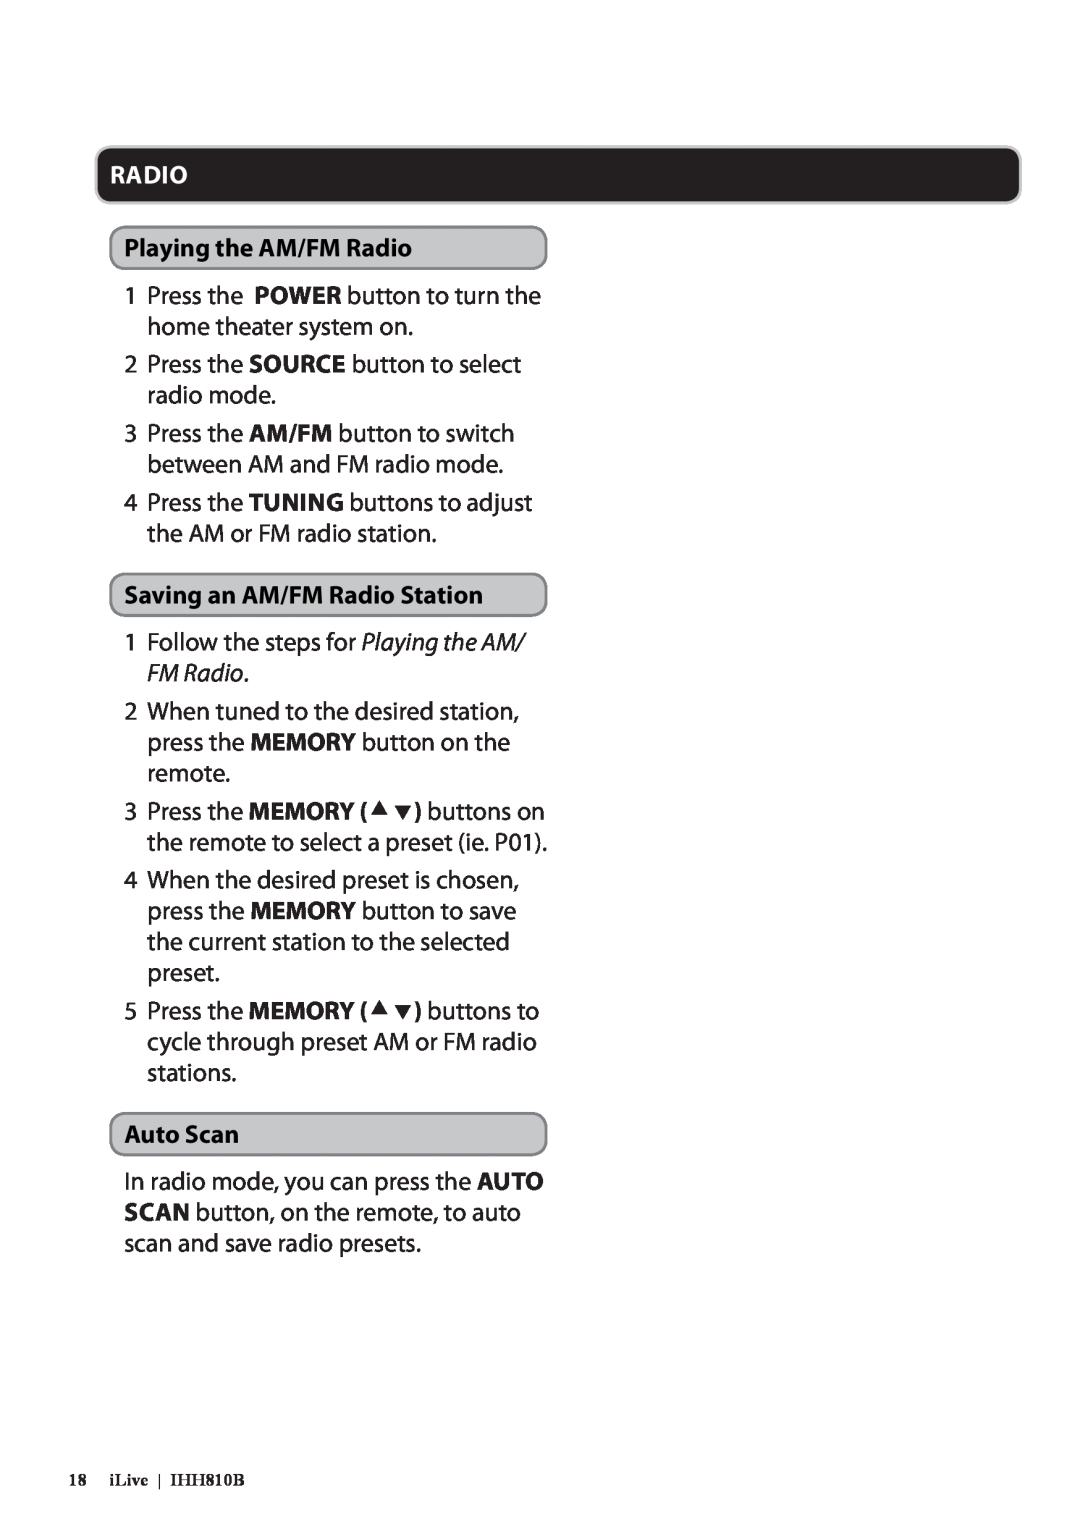 GPX IHH810B manual Playing the AM/FM Radio, Saving an AM/FM Radio Station, Auto Scan 